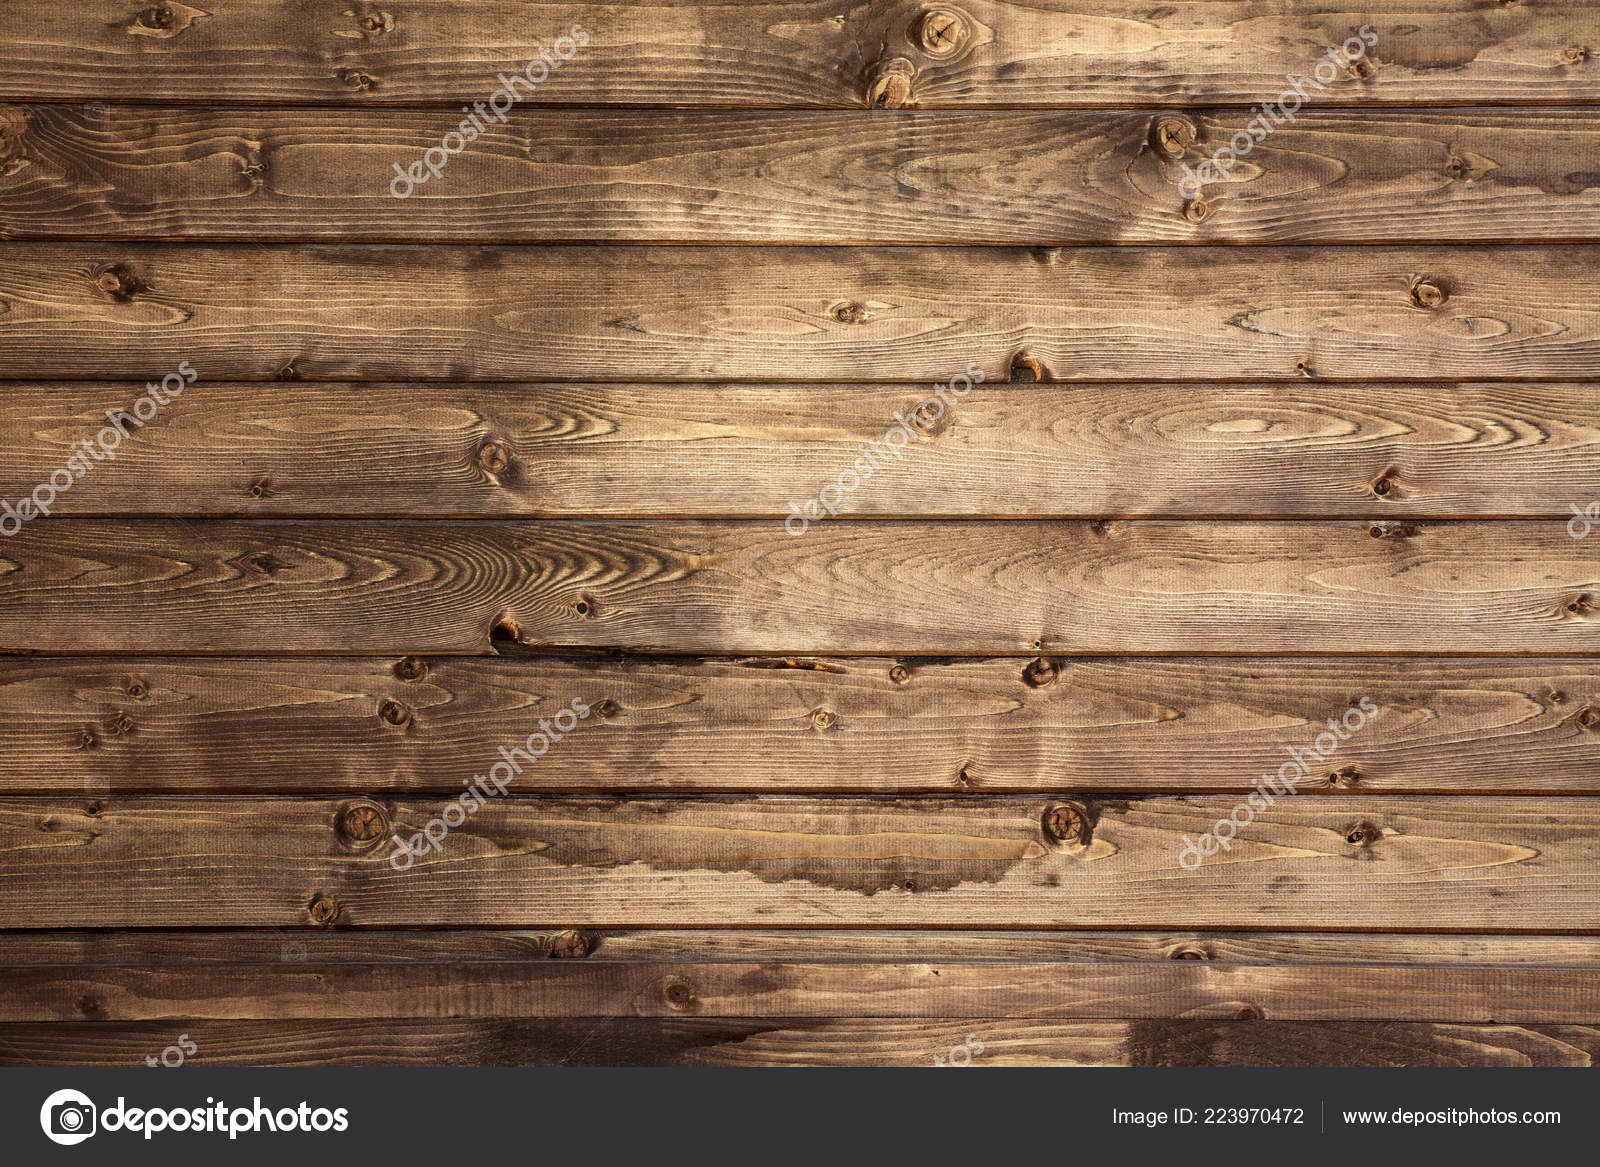 https://st4.depositphotos.com/1653304/22397/i/1600/depositphotos_223970472-stock-photo-wooden-brown-background-texture-natural.jpg